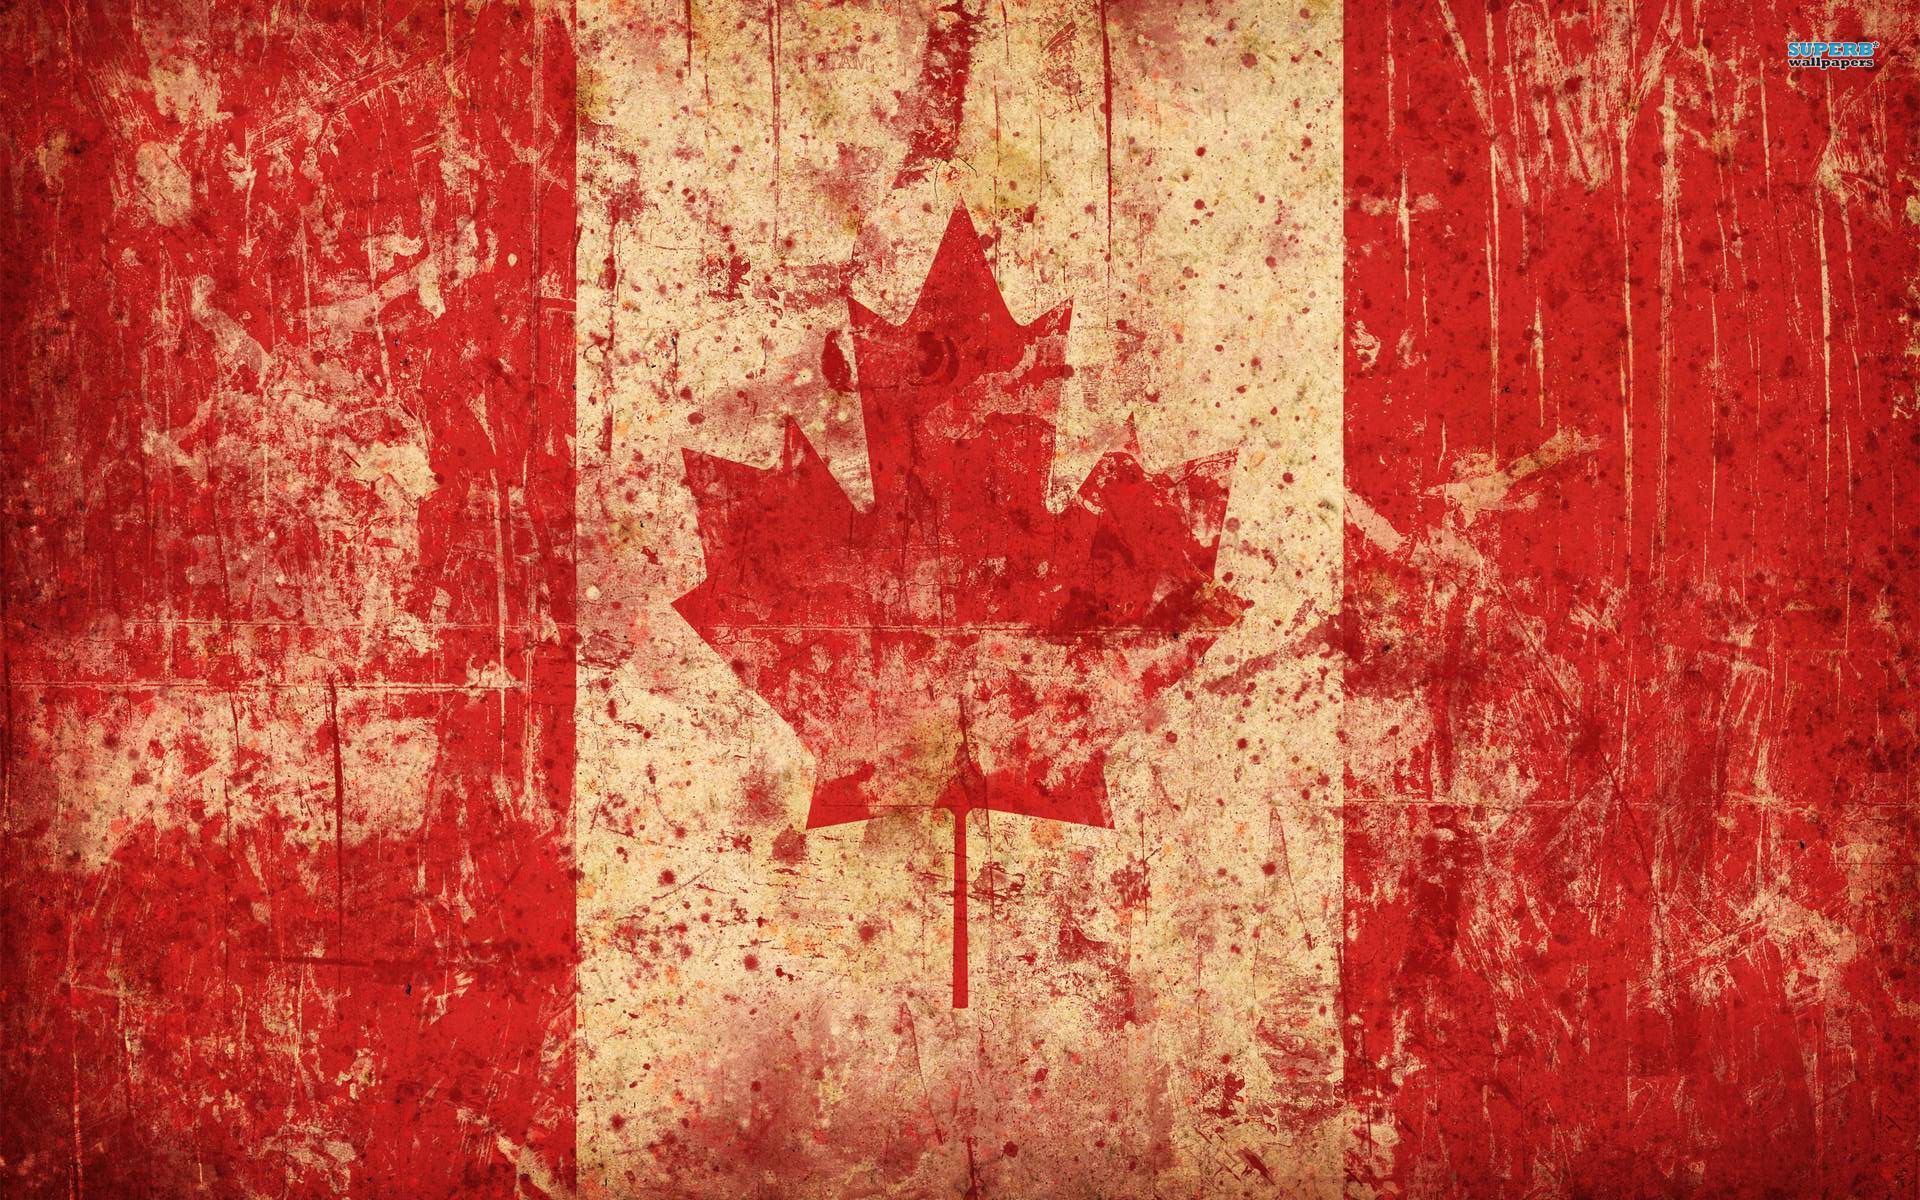 Grunge Canadian flag : Desktop and mobile wallpaper : Wallippo